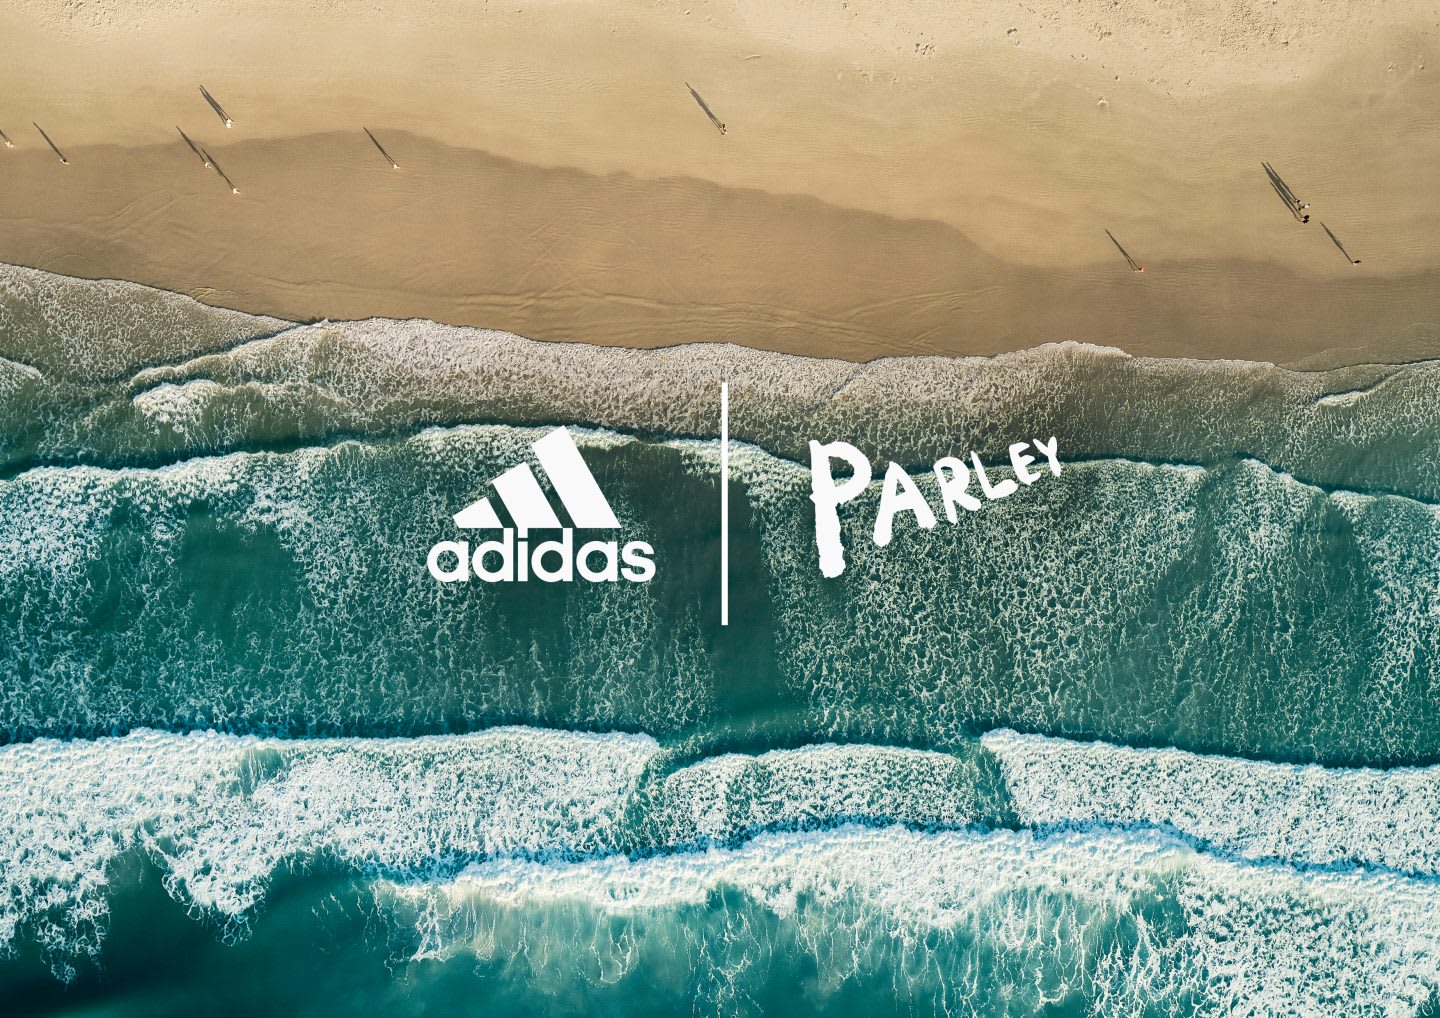 adidas x Parley – Turning Marine Plastic Pollution into Sustainable Fashion  - adidas GamePlan A | adidas GamePlan A